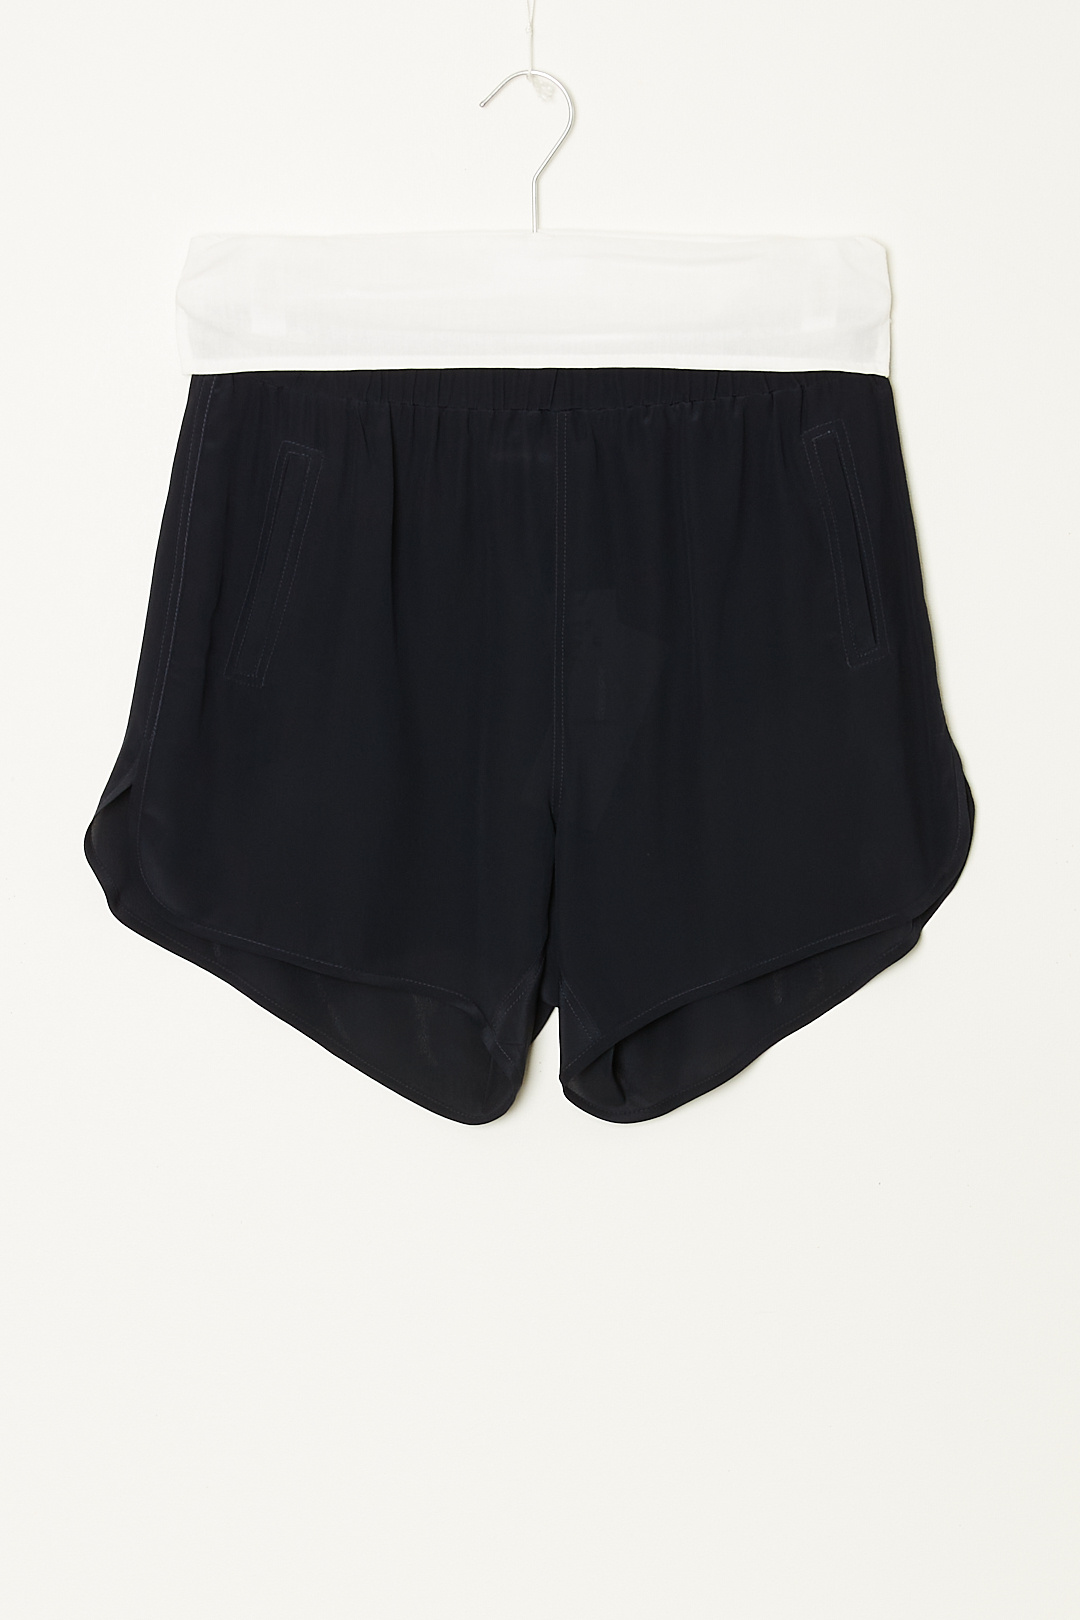 Monique van Heist Boxer silk shorts